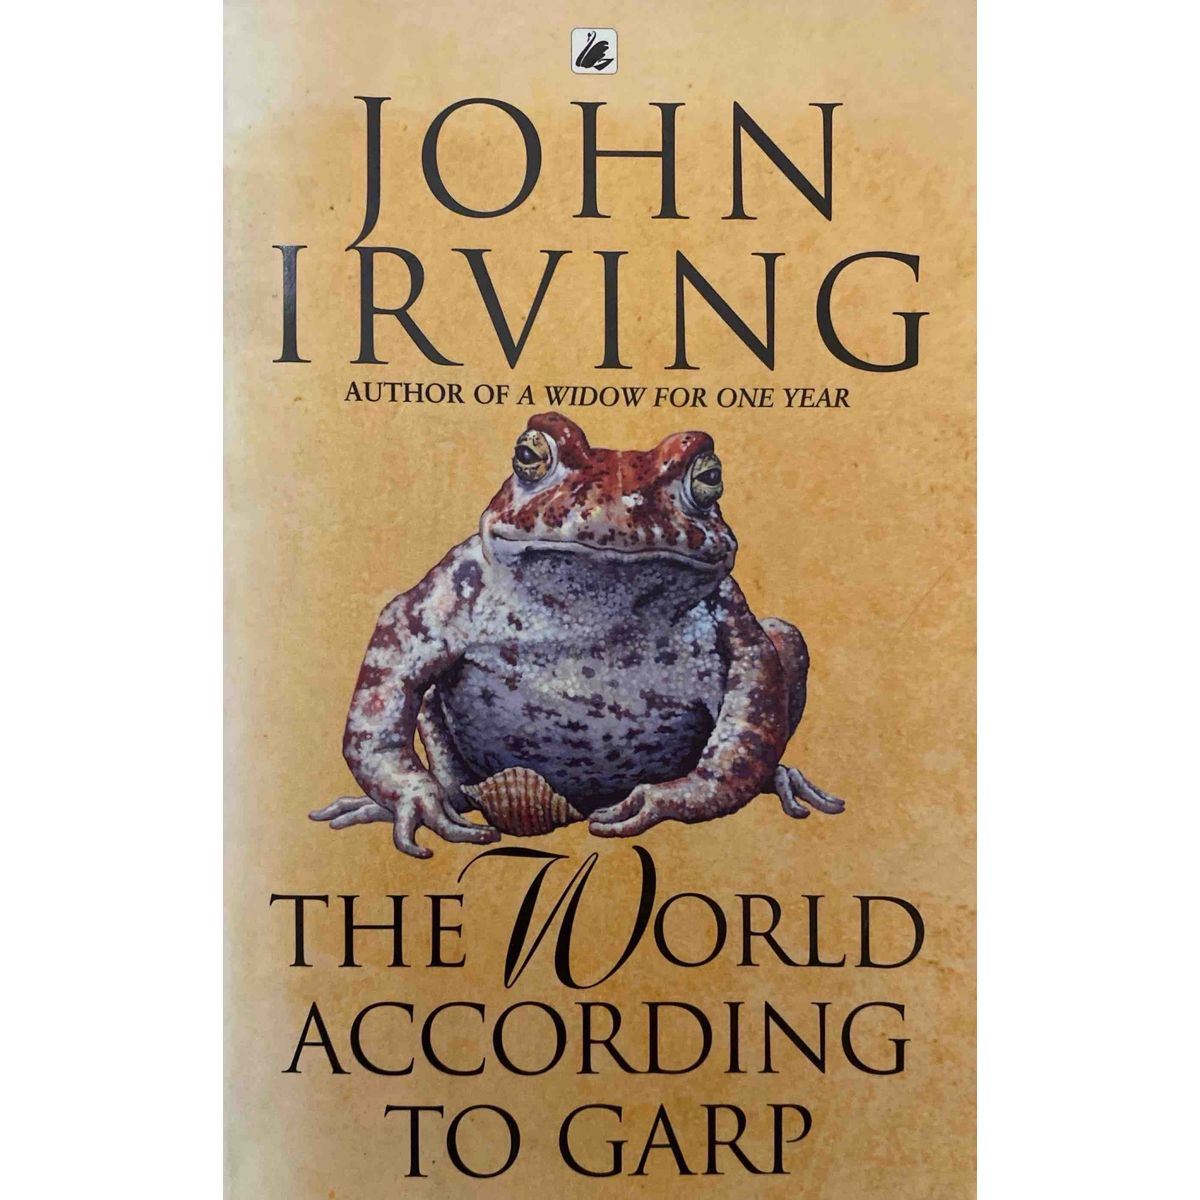 ISBN: 9780552992053 / 0552992054 - The World According to Garp by John Irving [1998]